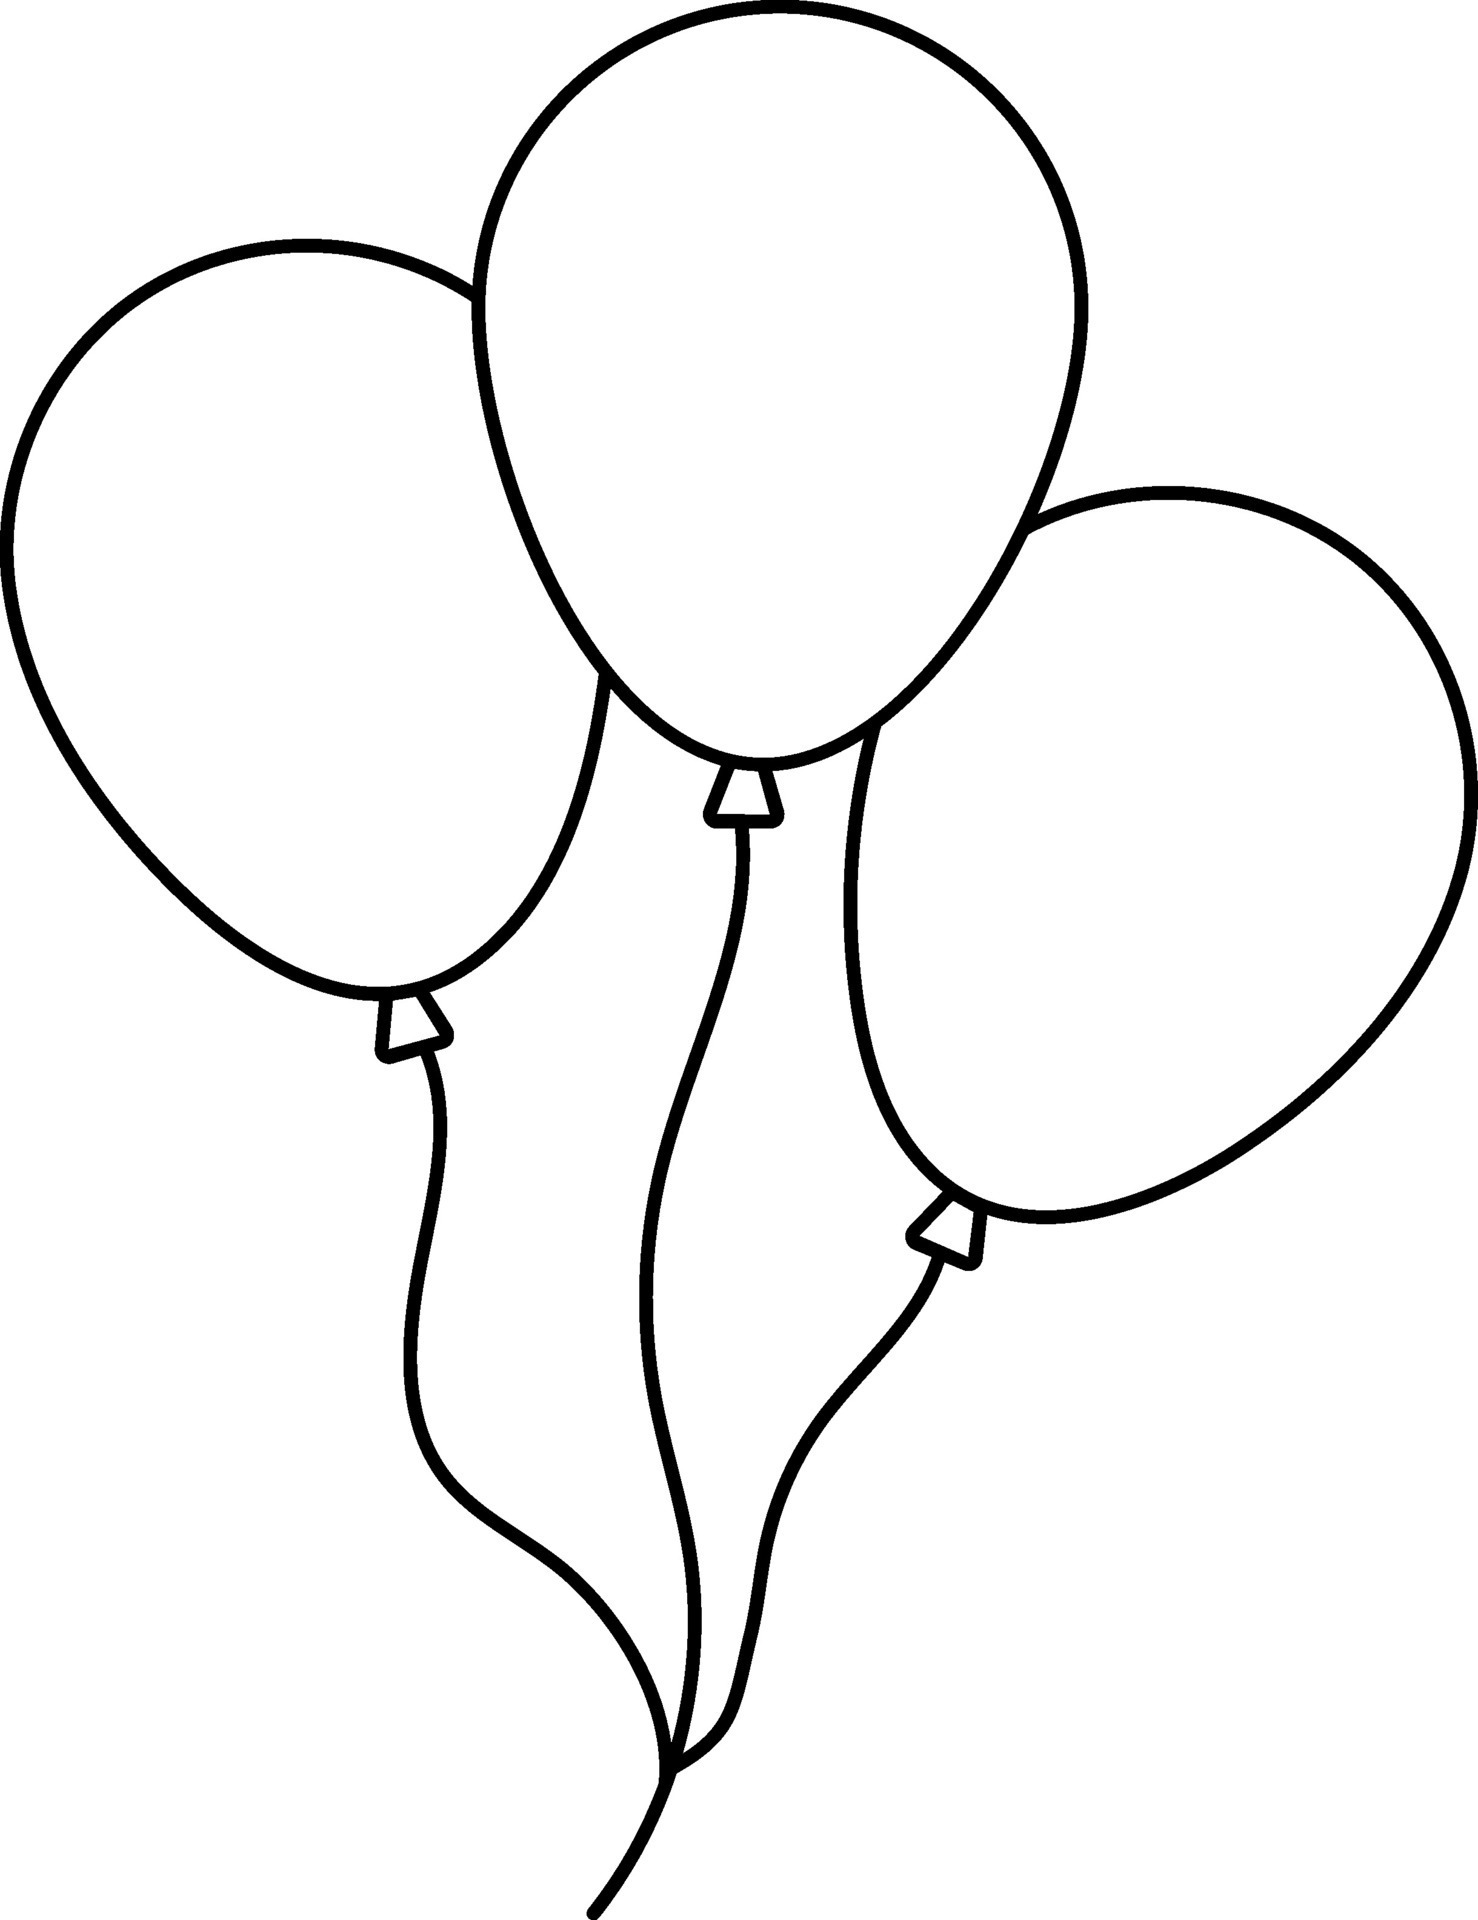 Vector balloons sign or symbol. 24798306 Vector Art at Vecteezy